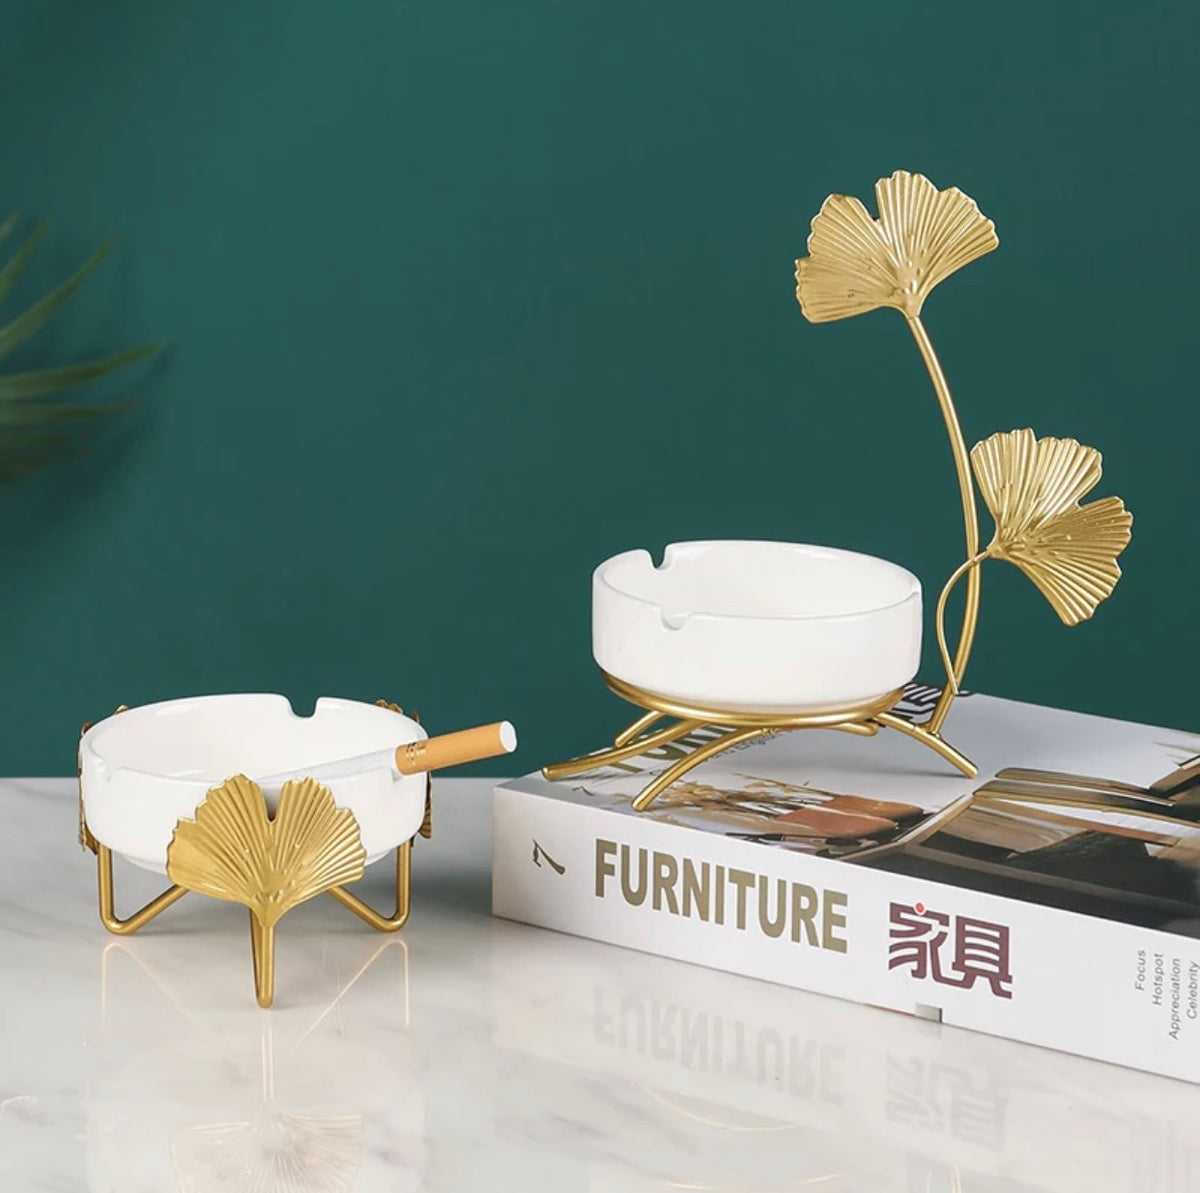 Louis Vuitton Change tray Marcel Set of 2 Porcelain Ashtray VIDE POCHE